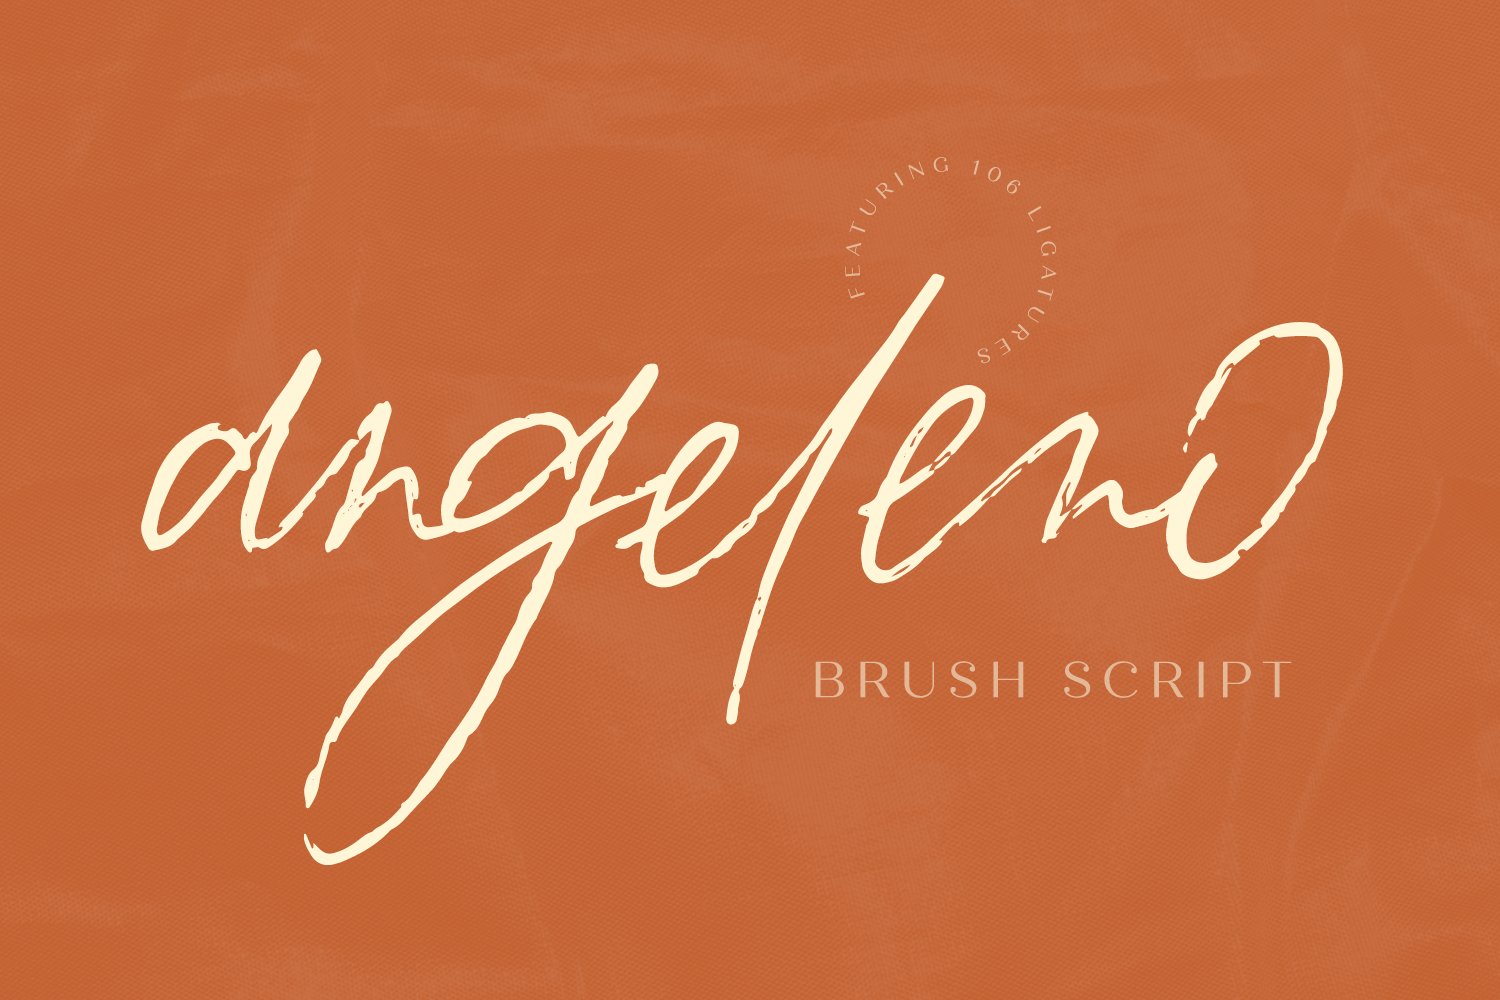 Angeleno Brush Script cover image.